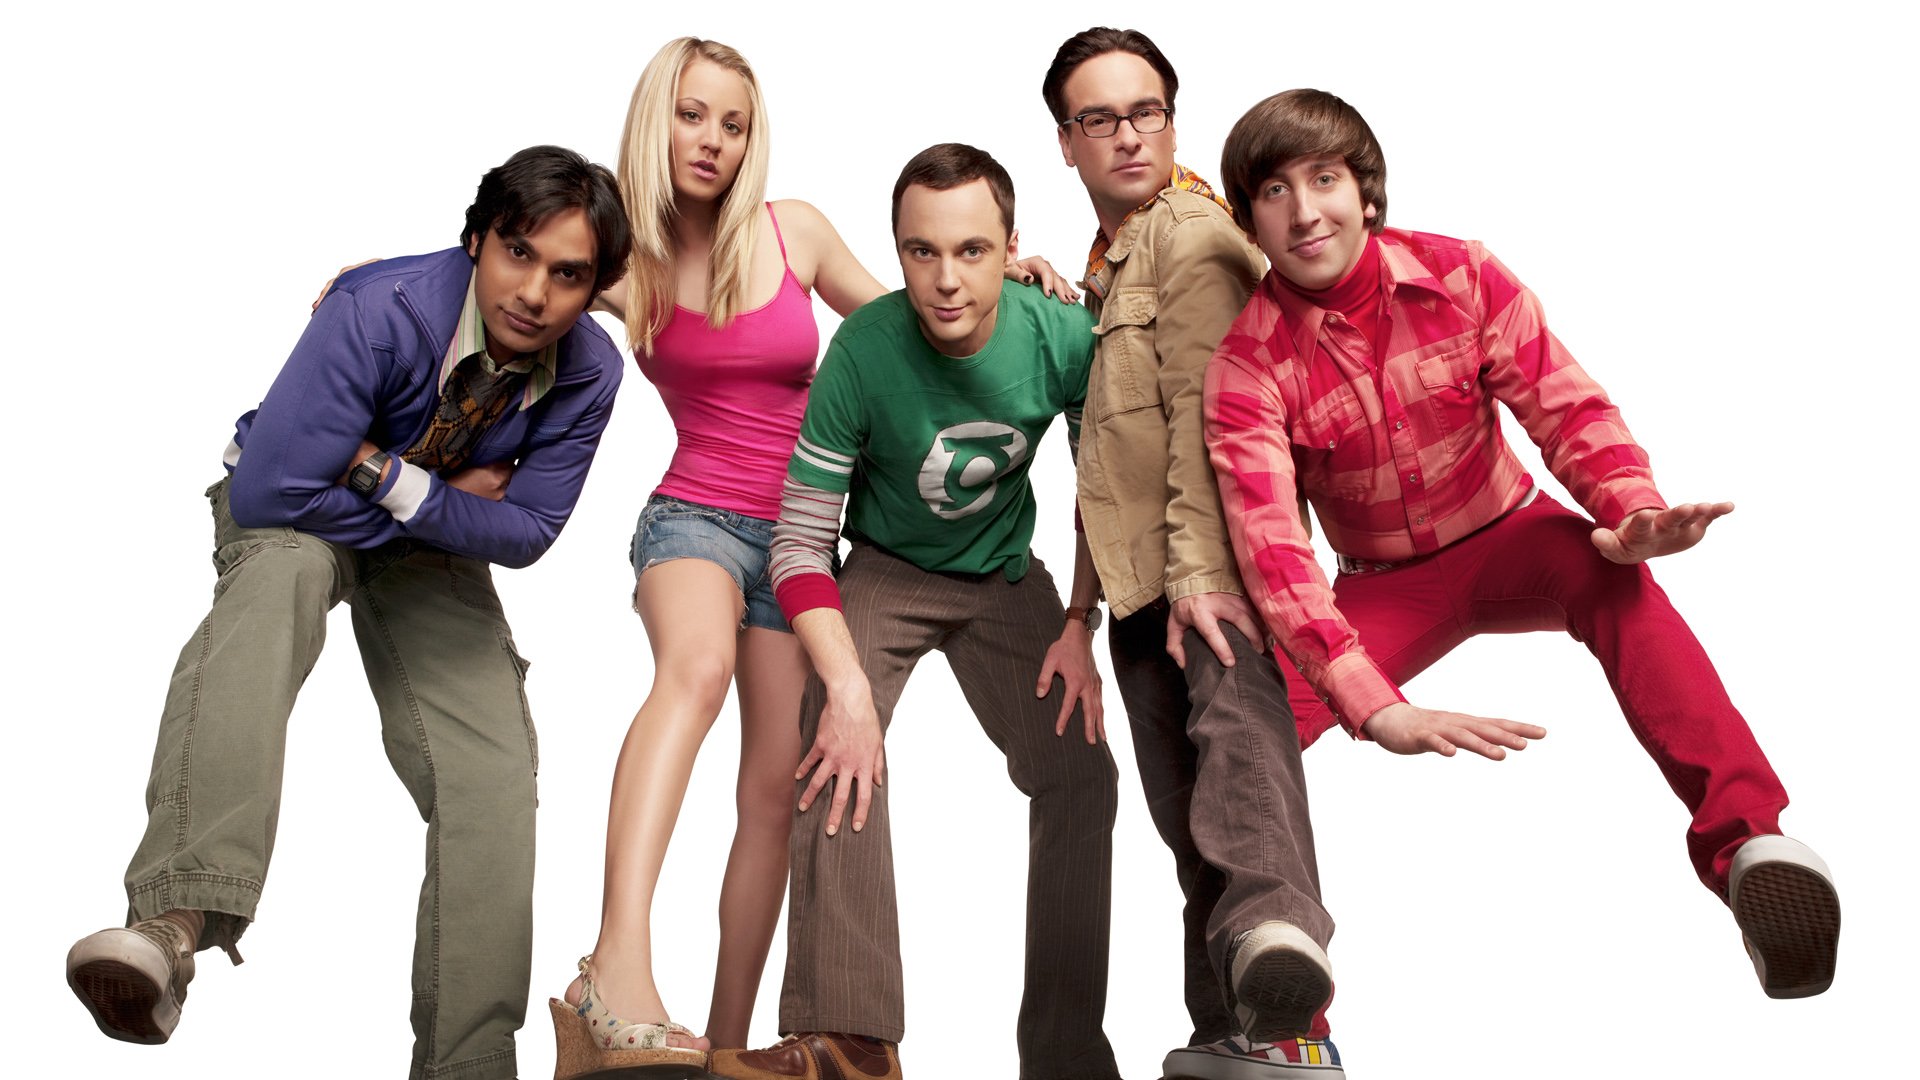 The Big Bang Theory Image - ID: 274117 - Image Abyss